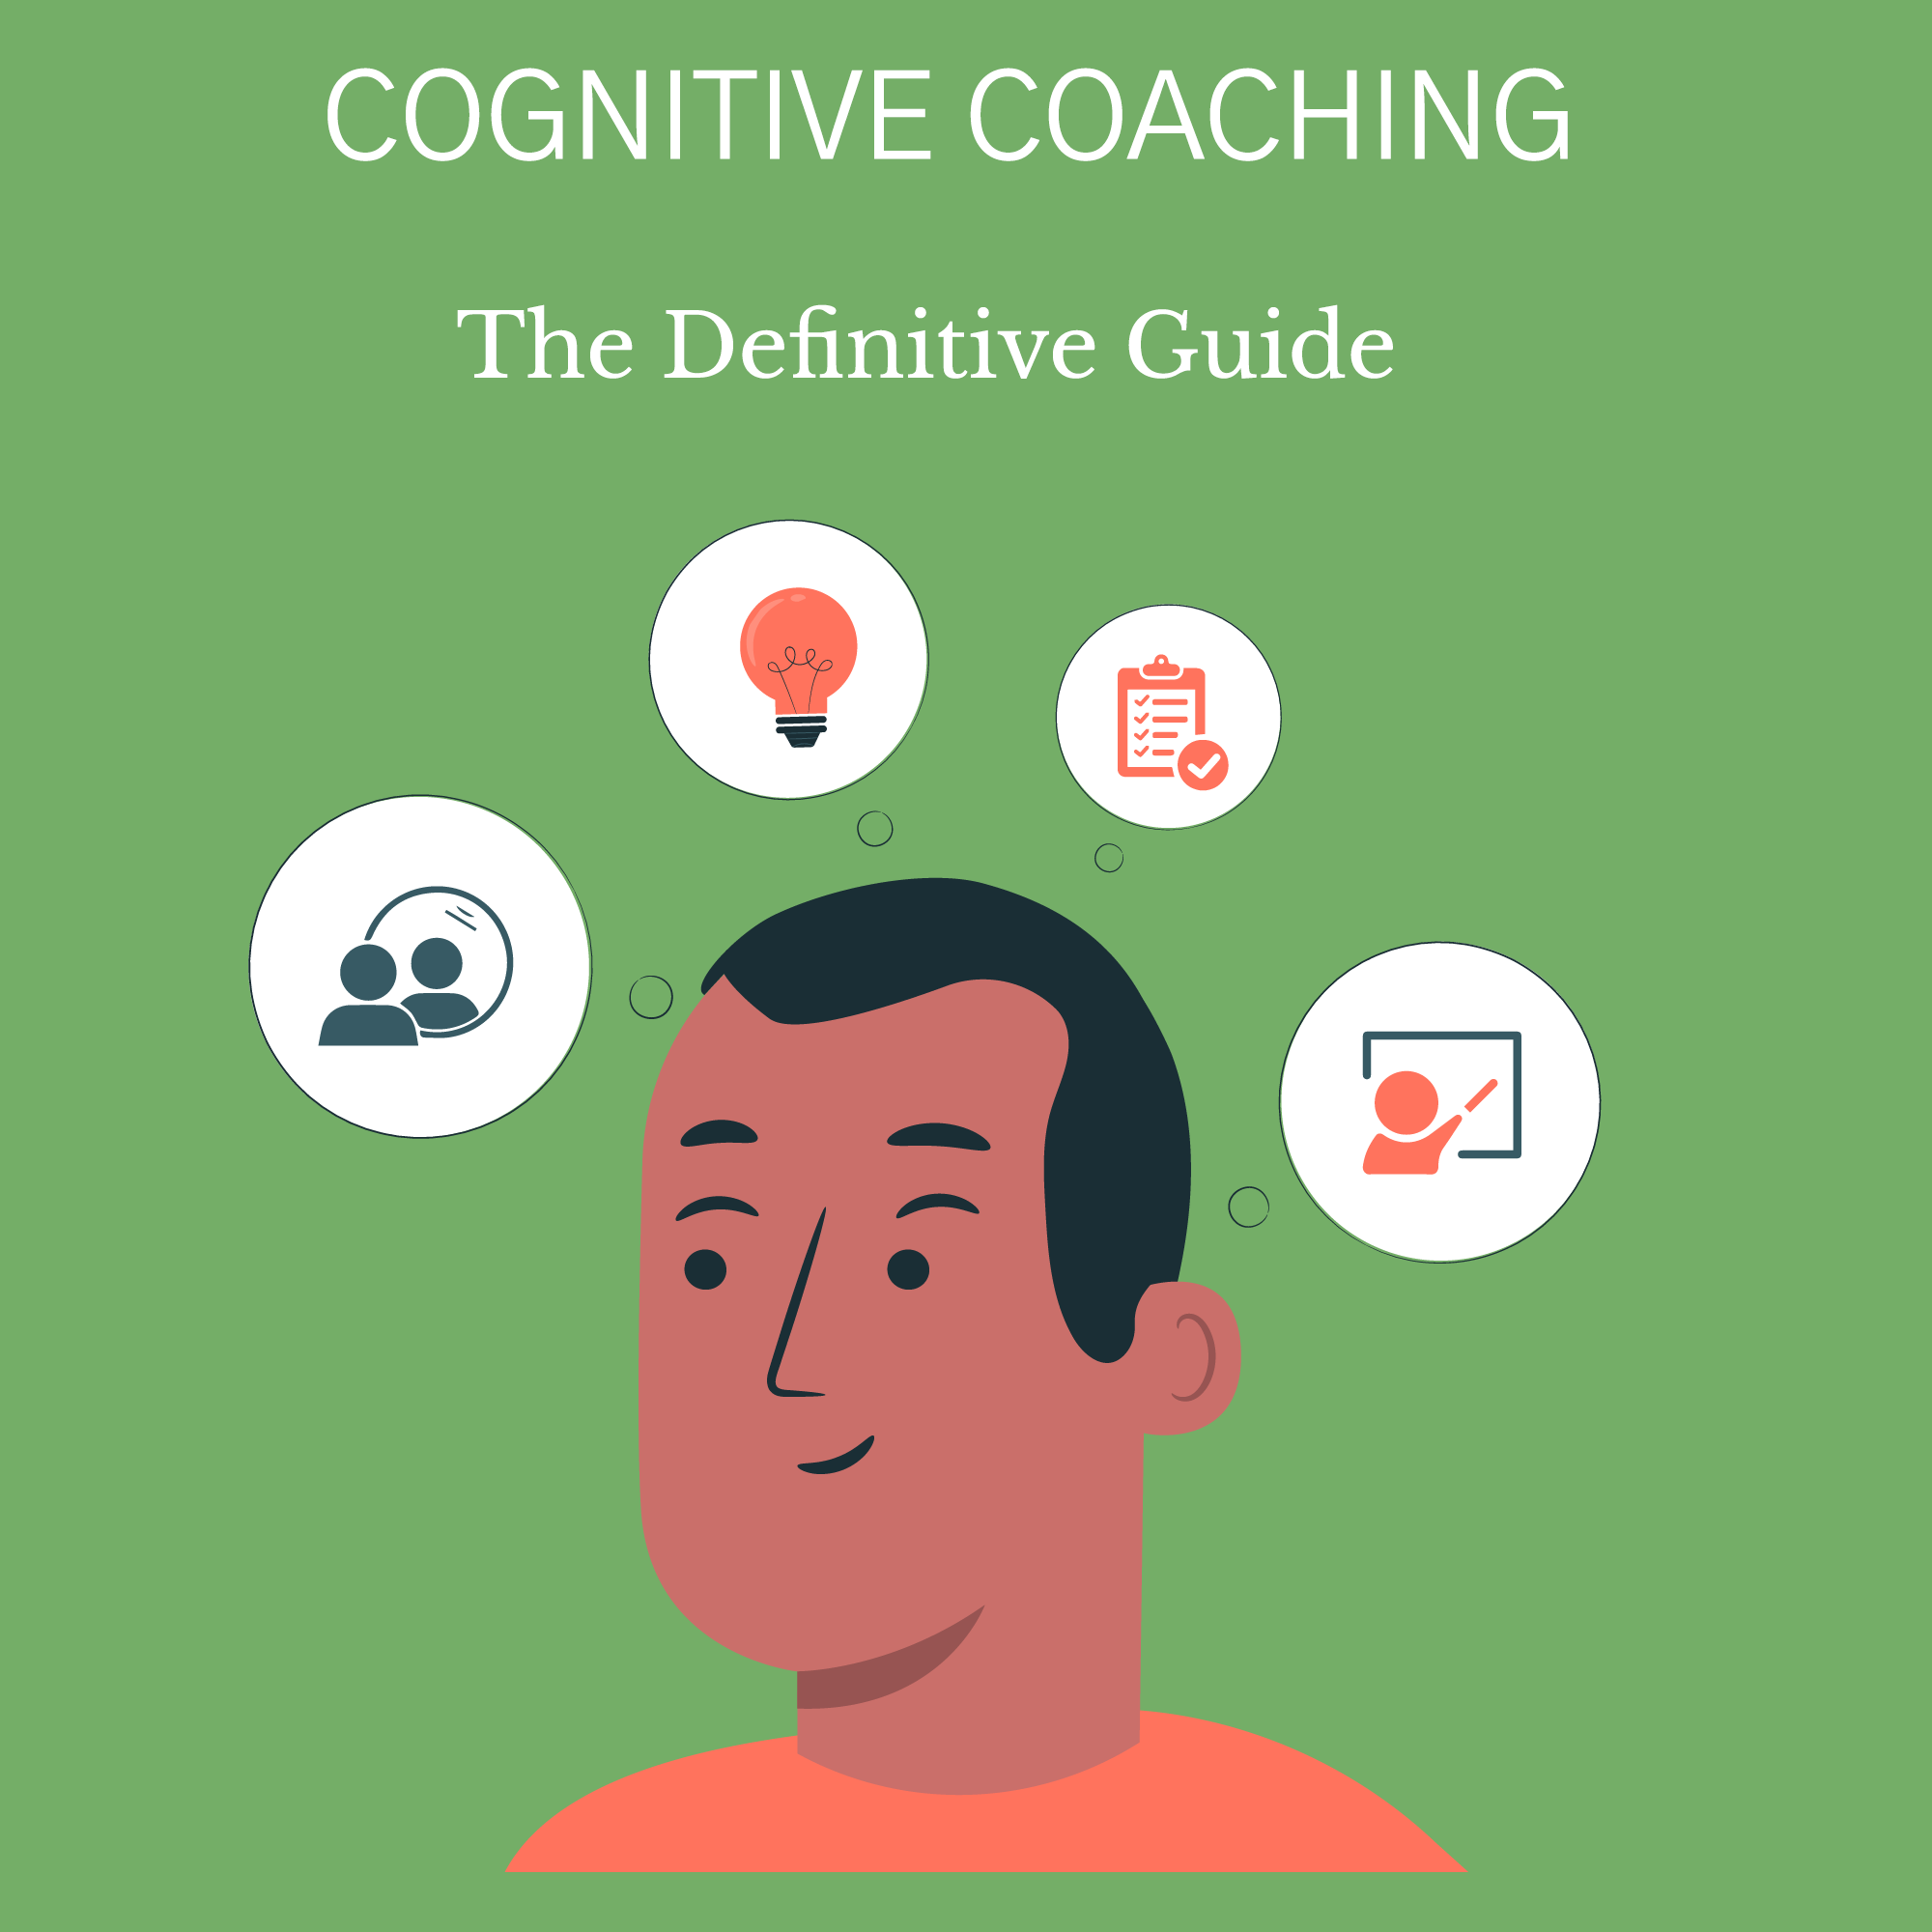 Cognitive Coaching [The Definitive Guide] cognitive coaching